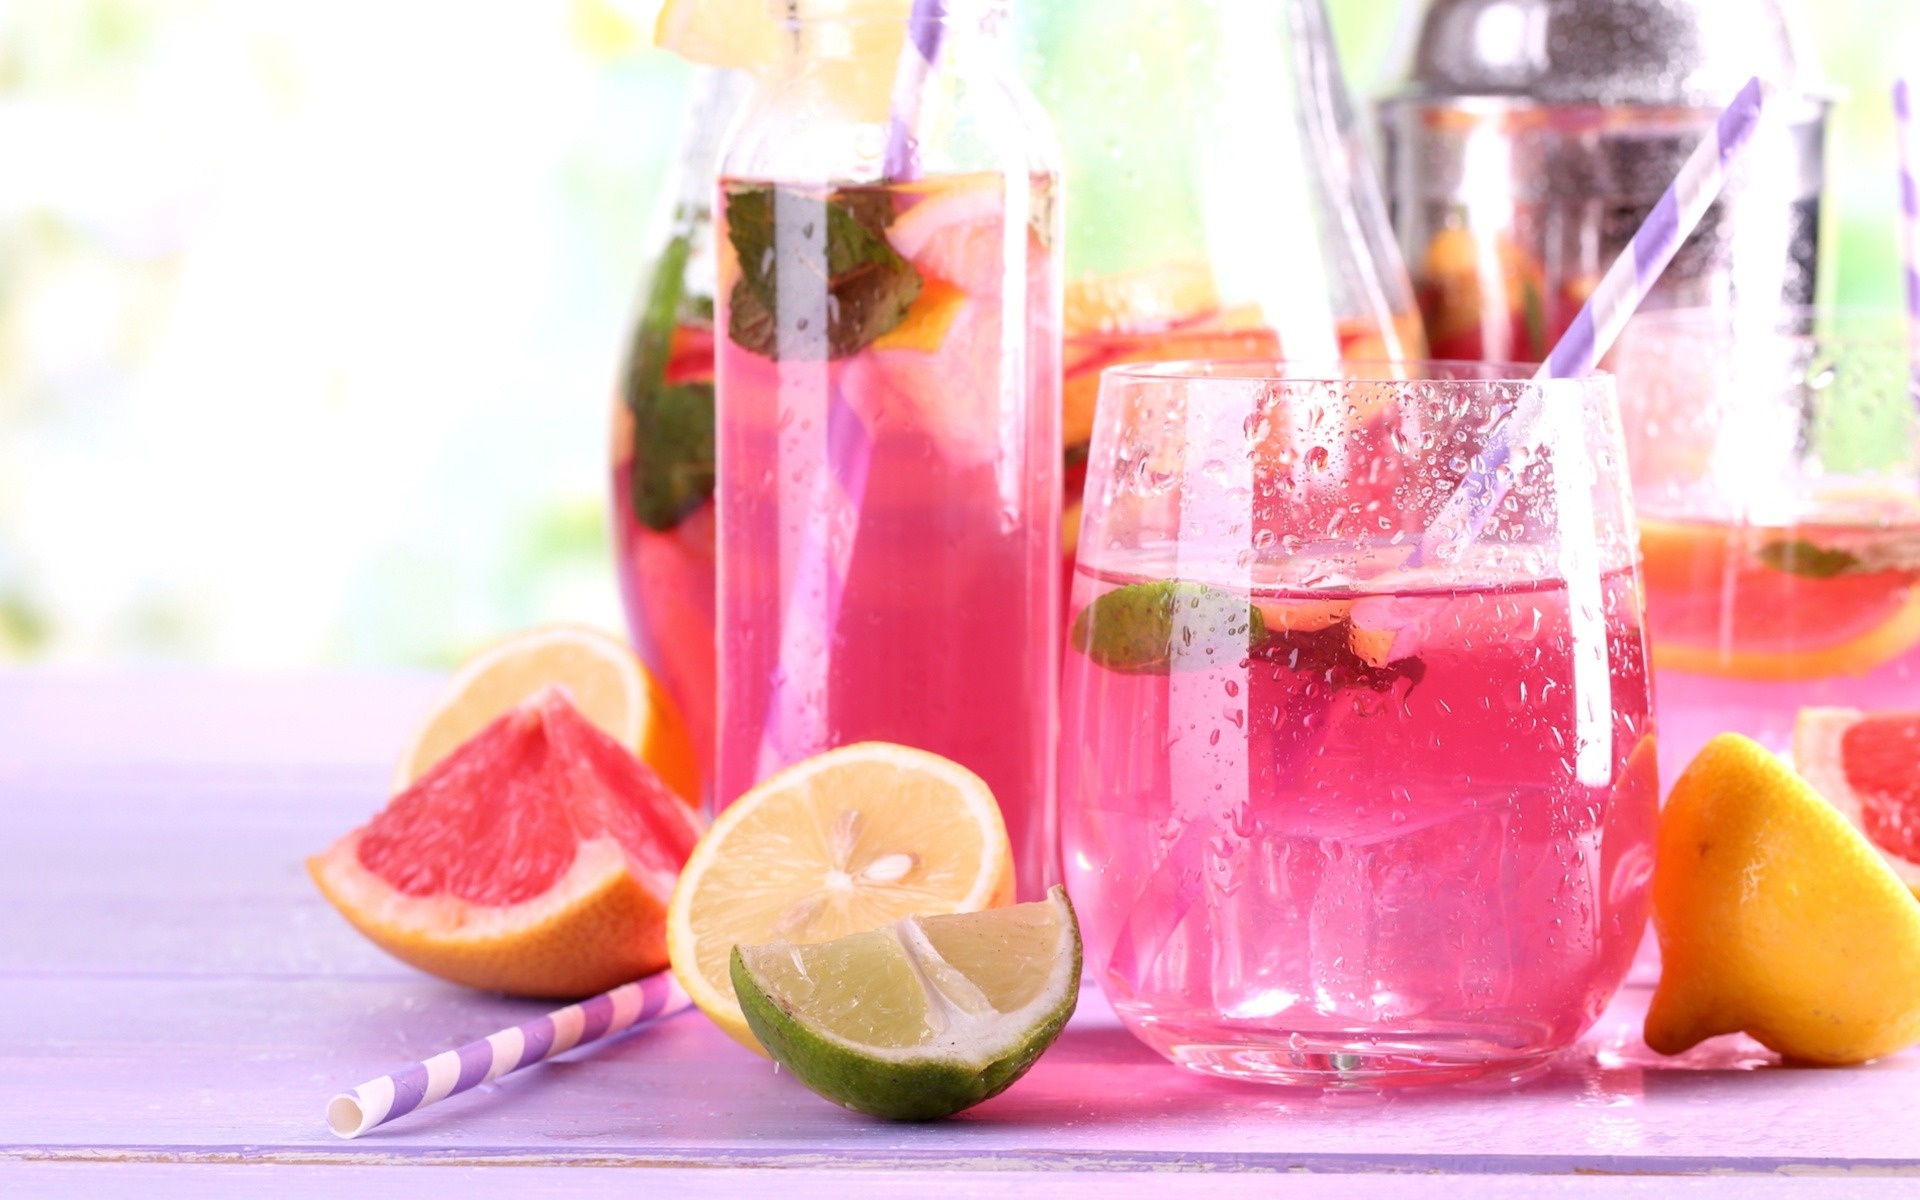 Lemonade: Grapefruit, Pink drink, Lime, Refreshing beverage. 1920x1200 HD Wallpaper.